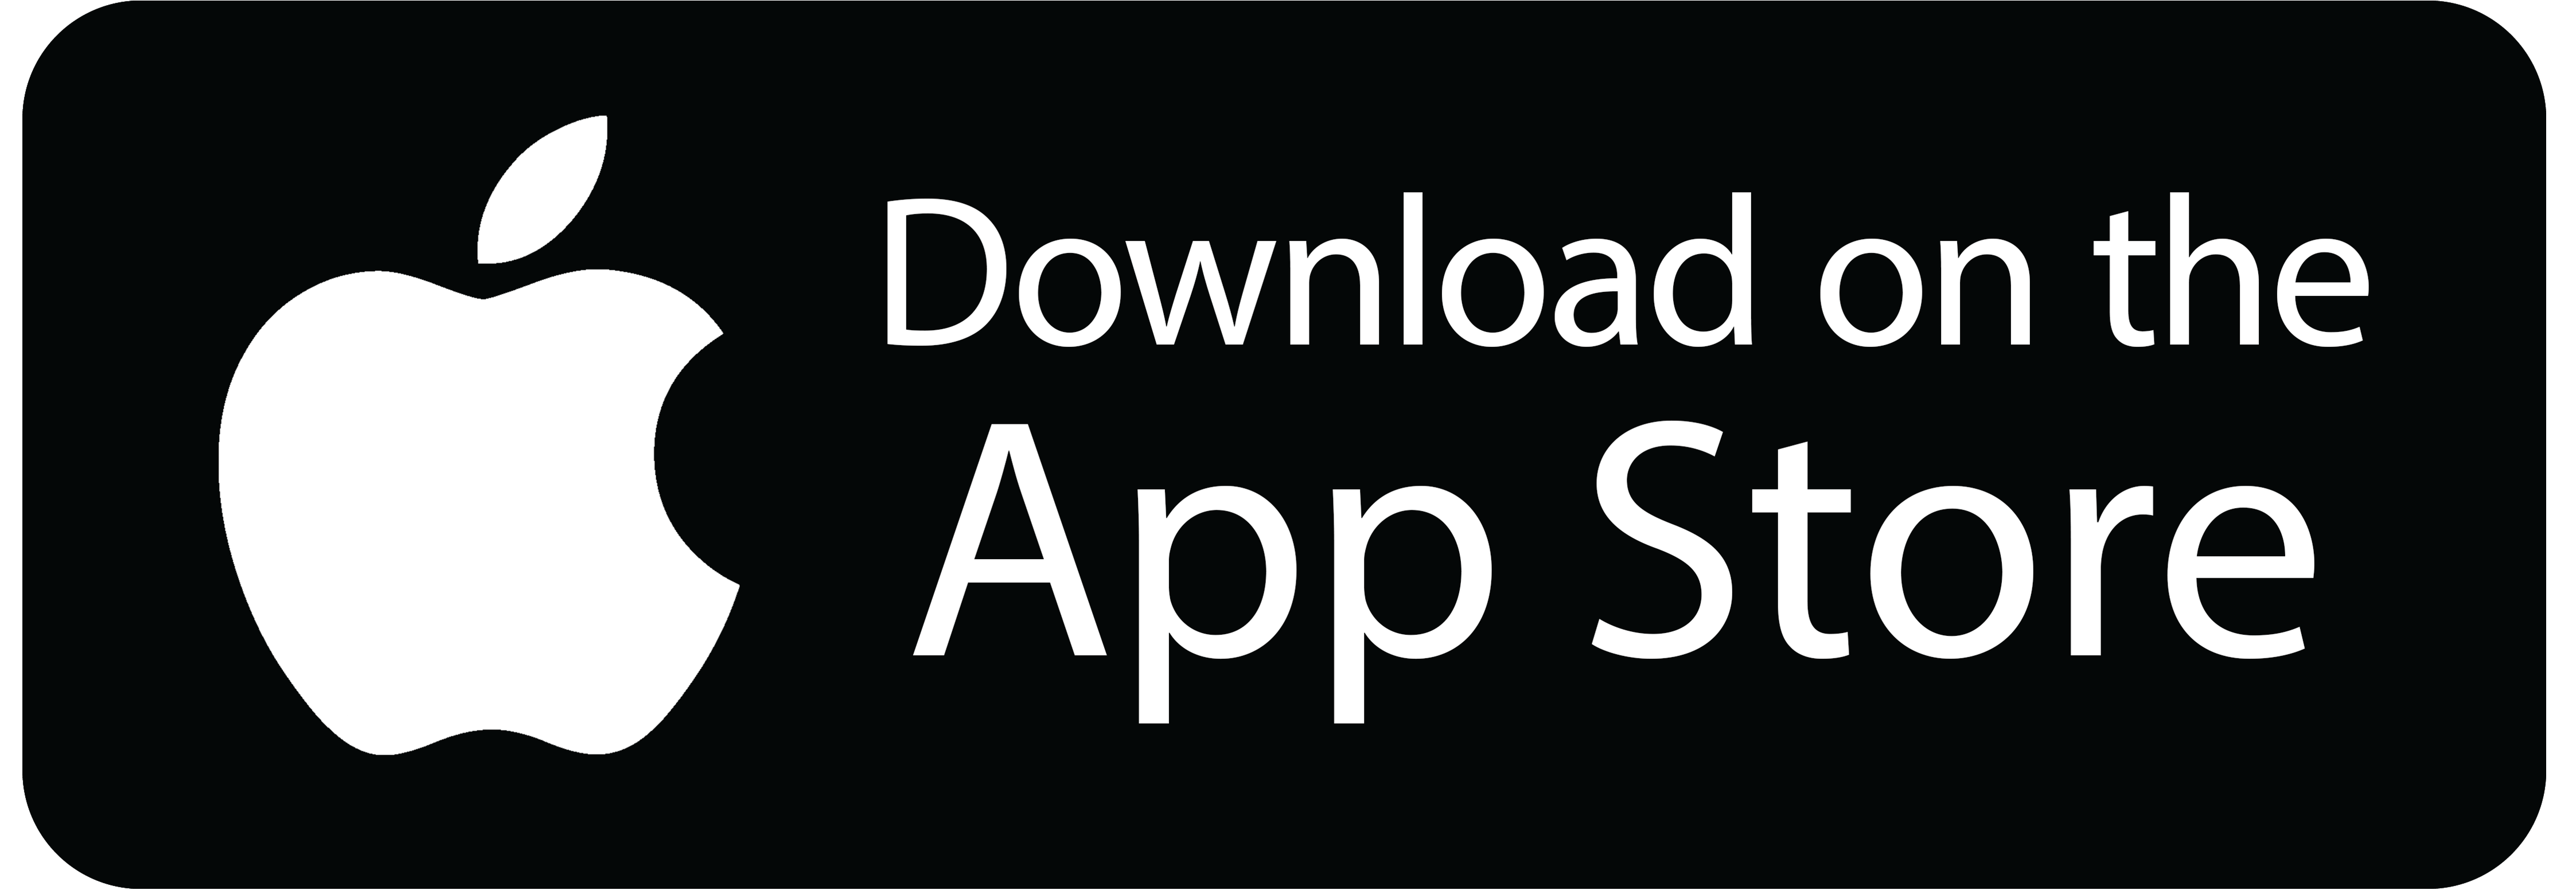 Windows App Store Logo - itunes-app-store-logo » Virtual Physical Therapists